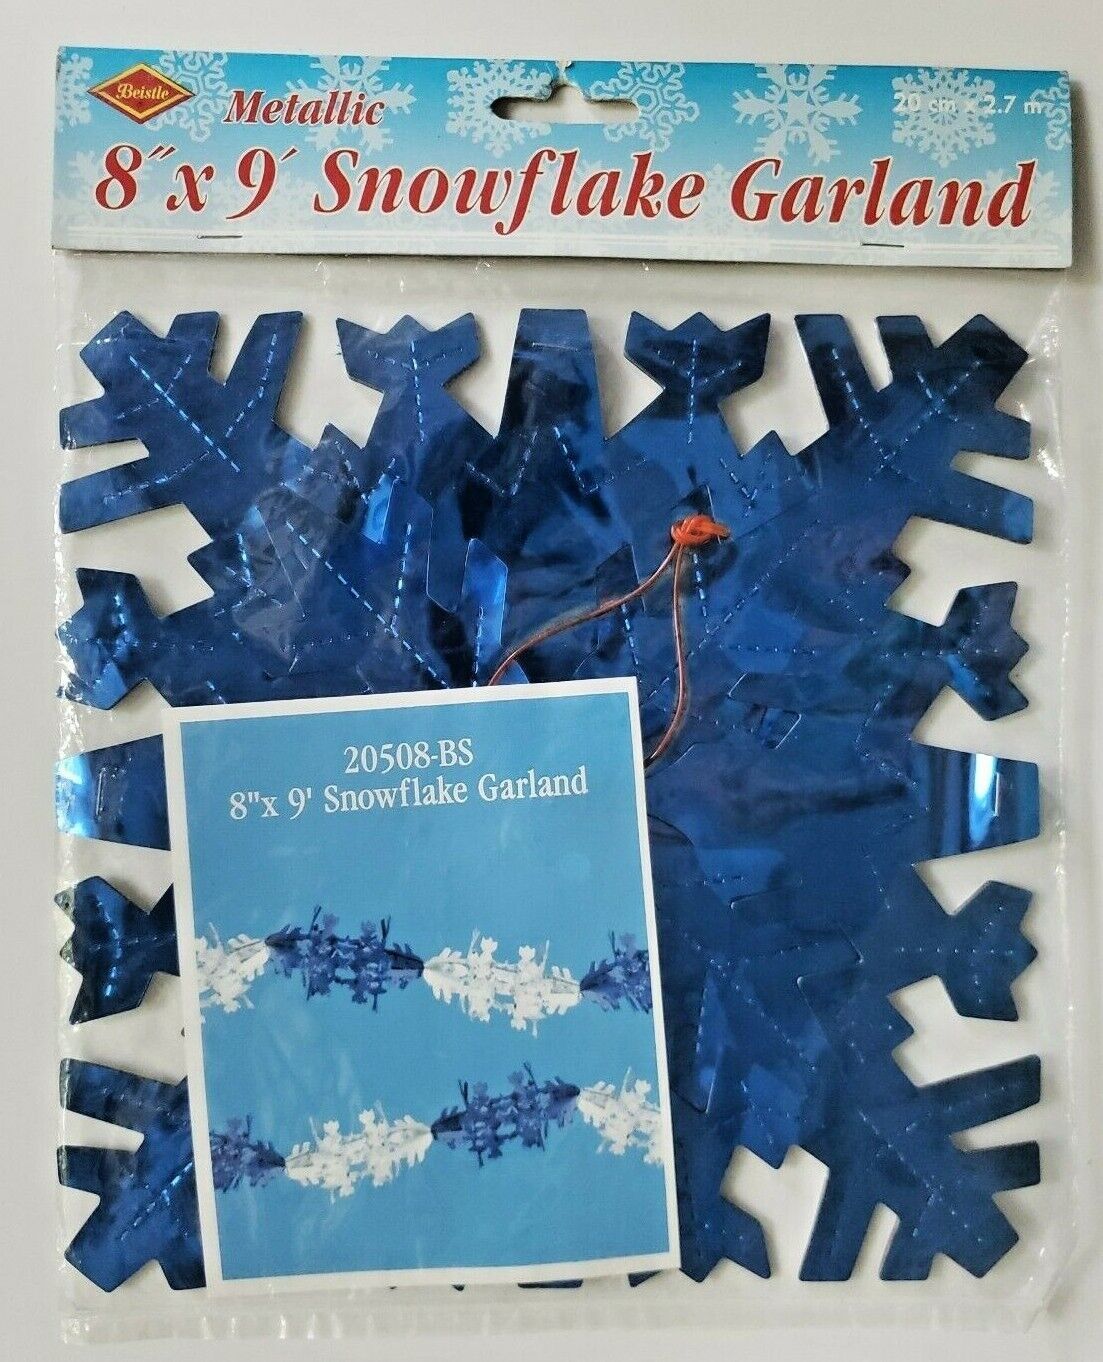 1990's Beistle Metallic Snowflake Garland 8"x9' New In Packaging - $12.99